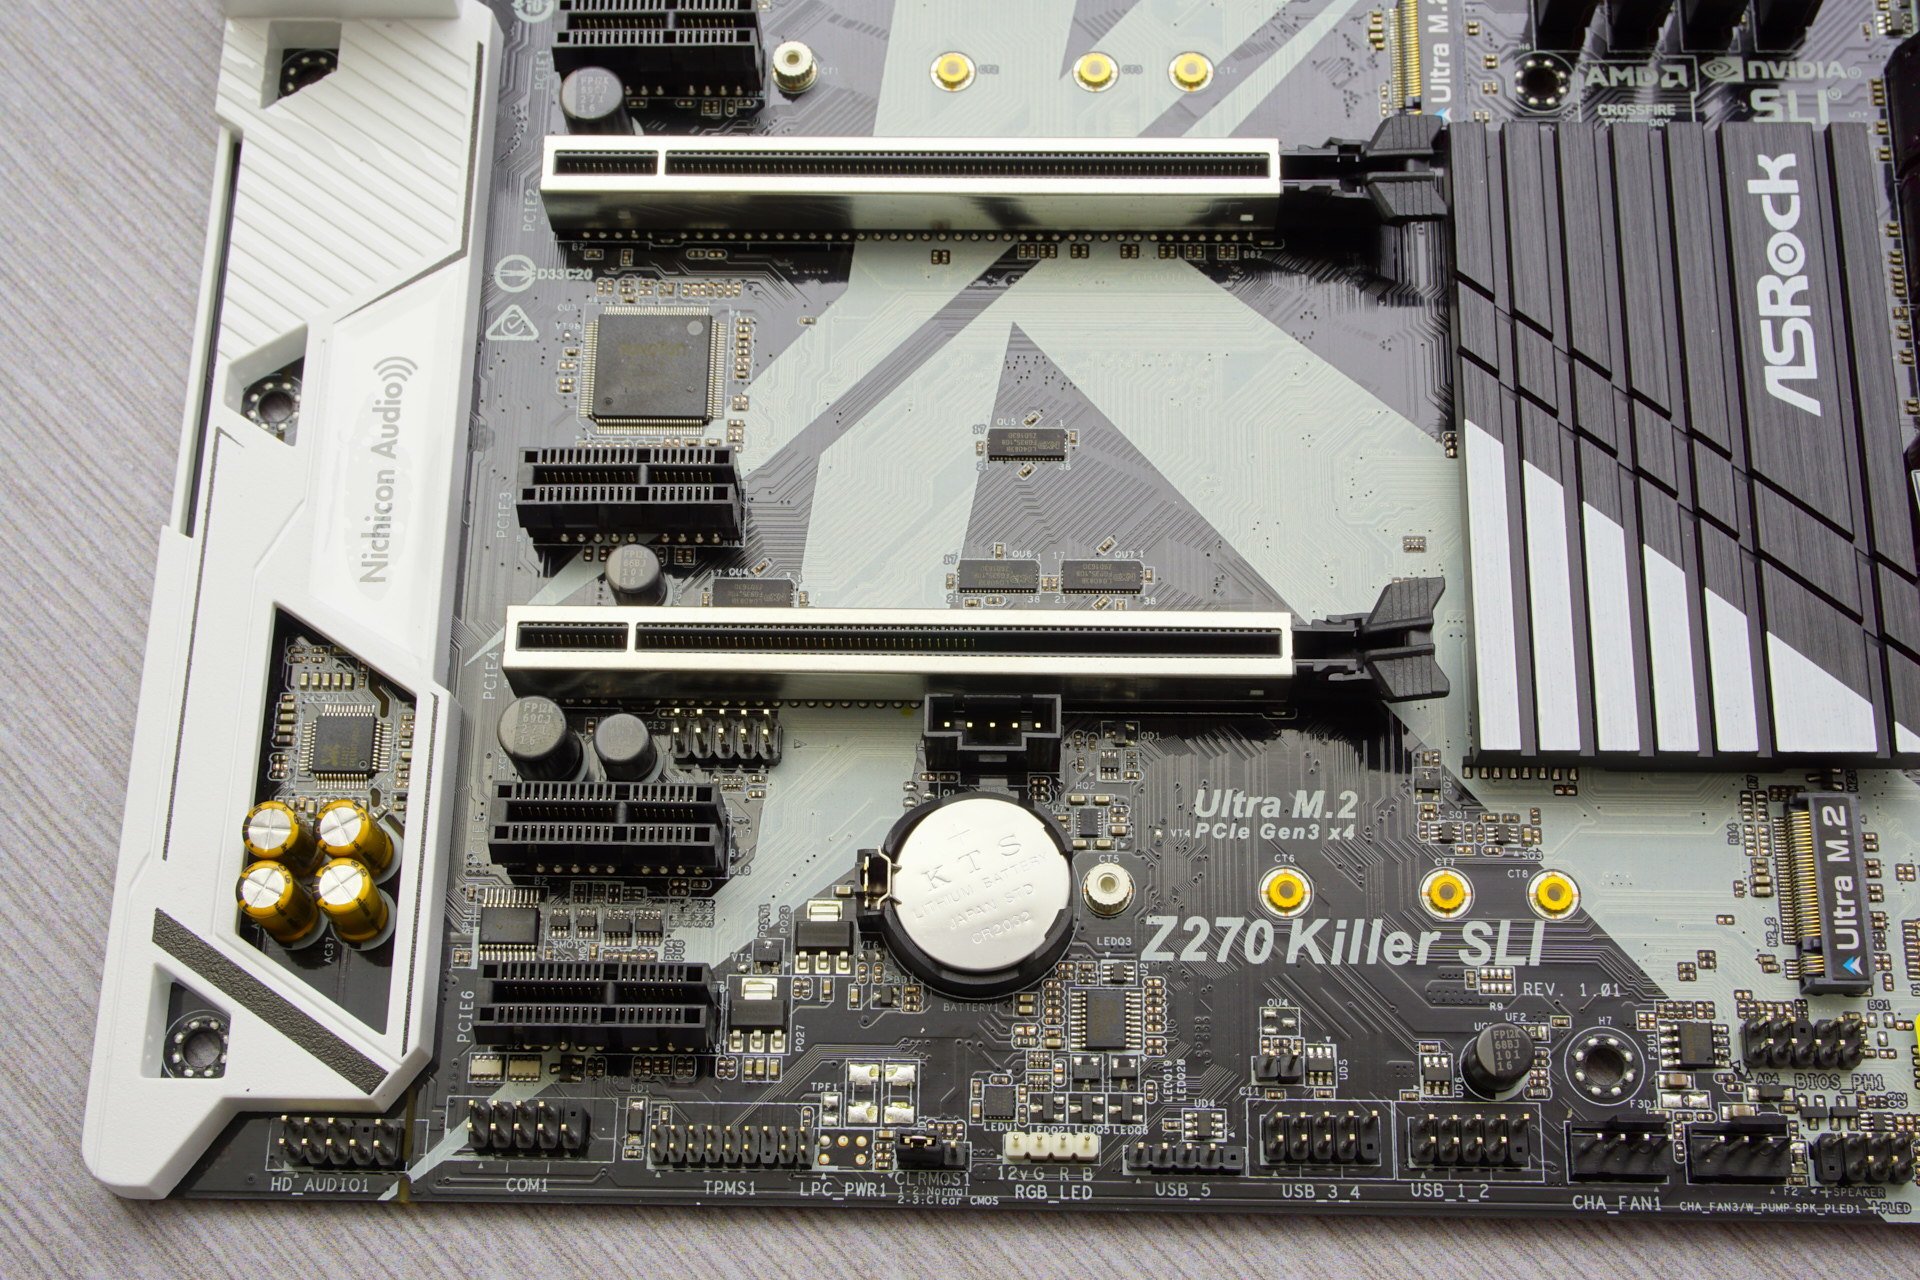 savurgan bir Bakmak aniden  ASRock Z270 Killer SLI Board Features, Visual Inspection - Kaby Lake  Motherboards at $140: MSI Z270 SLI Plus vs. ASRock Z270 Killer SLI